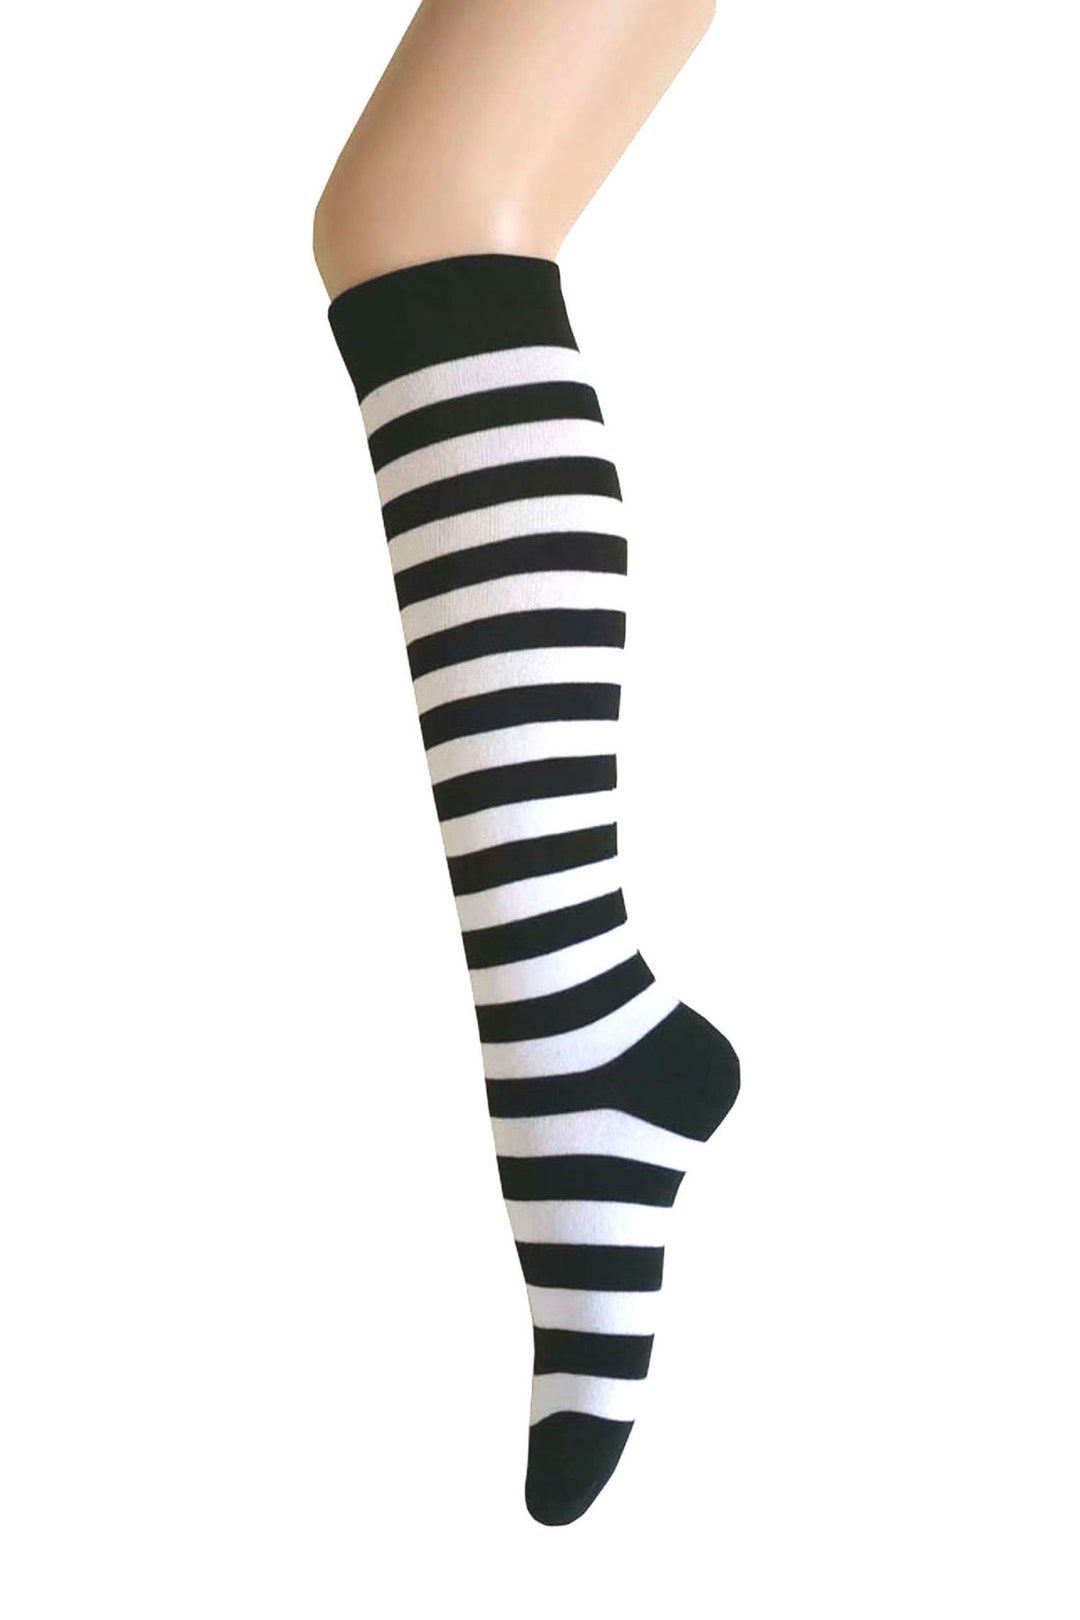 Women and Girls Multi-colors Knee High Zebra Stripes Halloween Costume ...